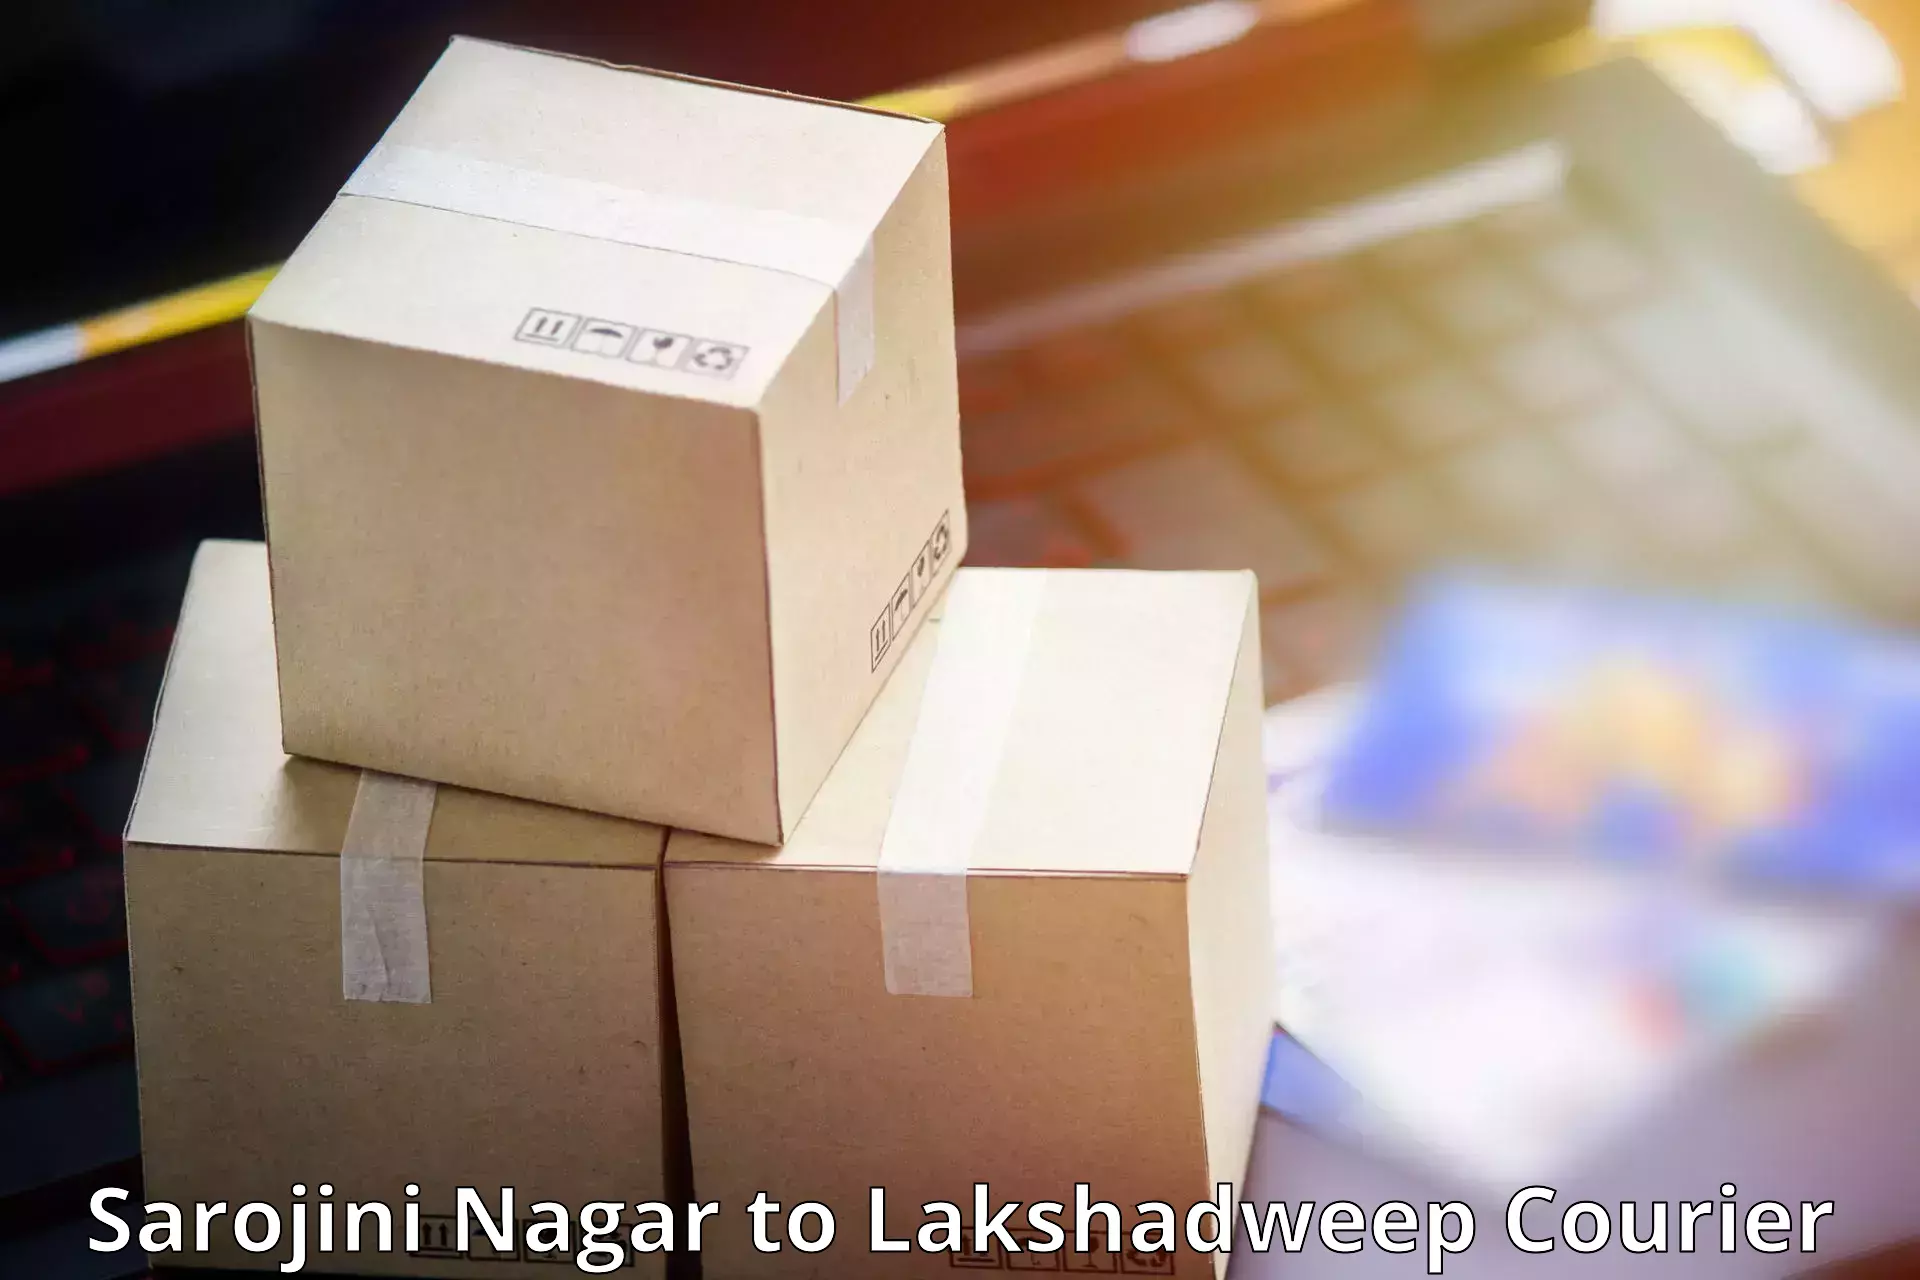 Courier service efficiency Sarojini Nagar to Lakshadweep